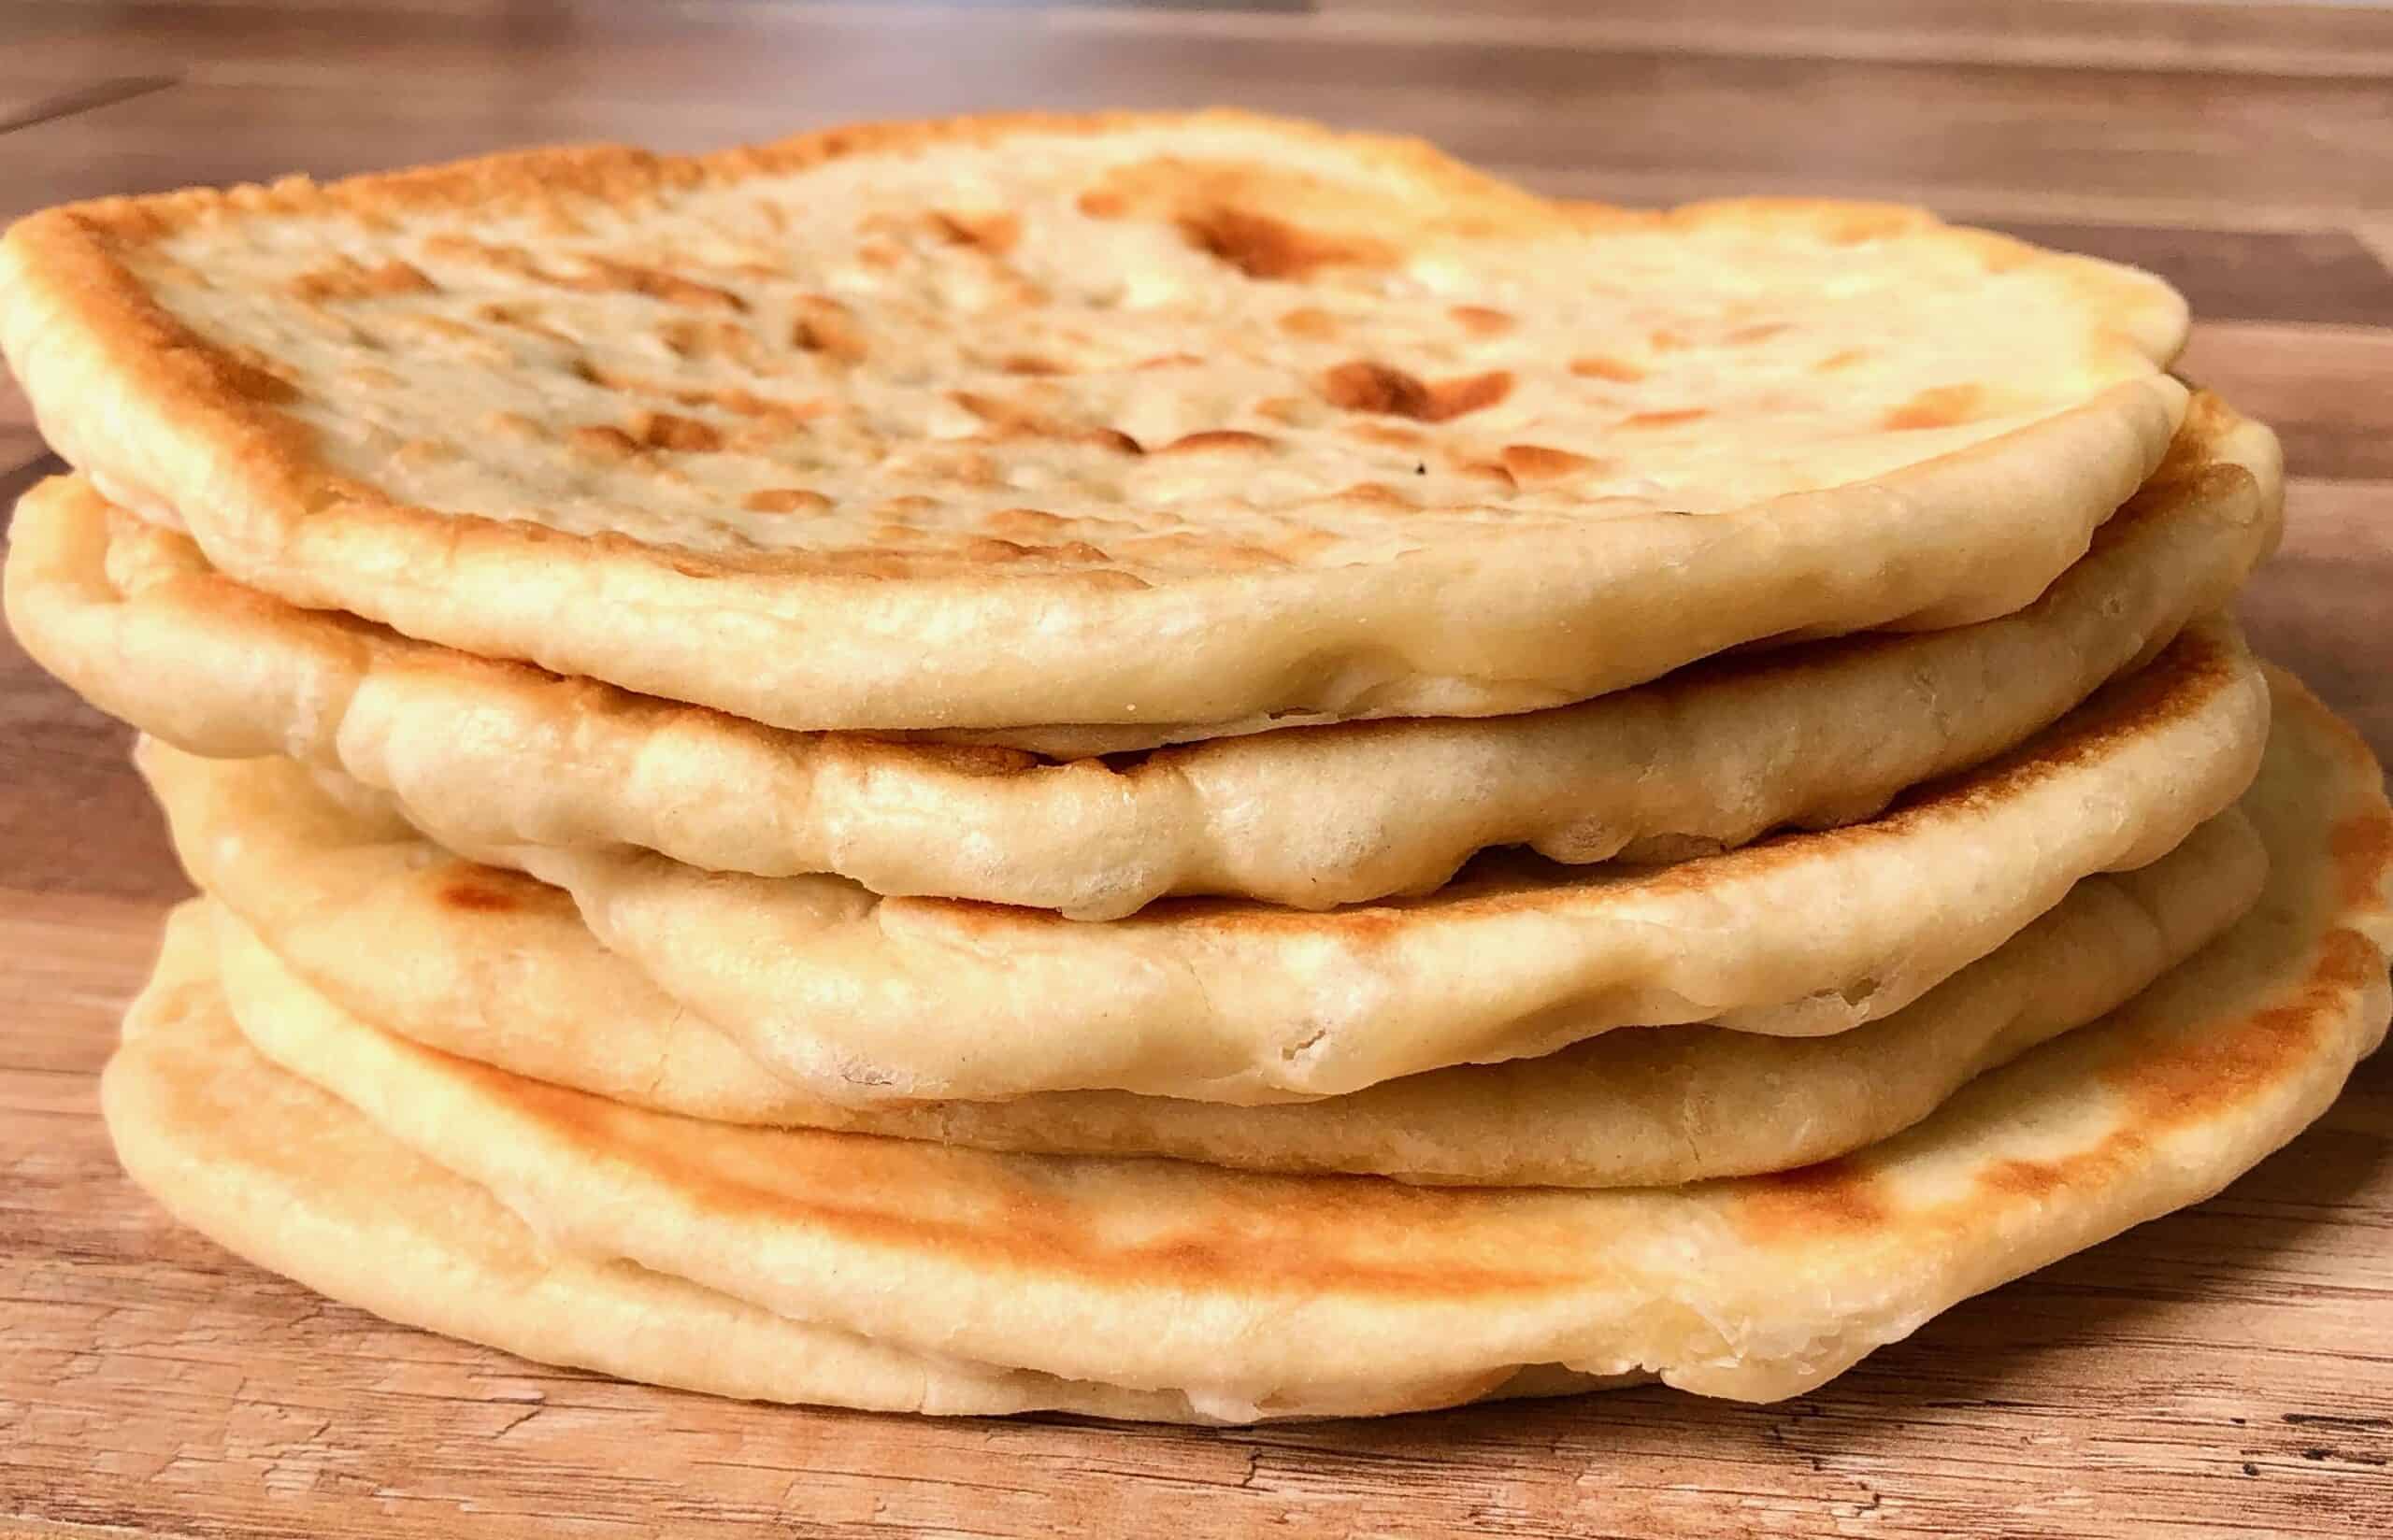 https://www.mygreekdish.com/wp-content/uploads/2014/10/Easy-homemade-Pita-Bread-recipe-scaled.jpeg